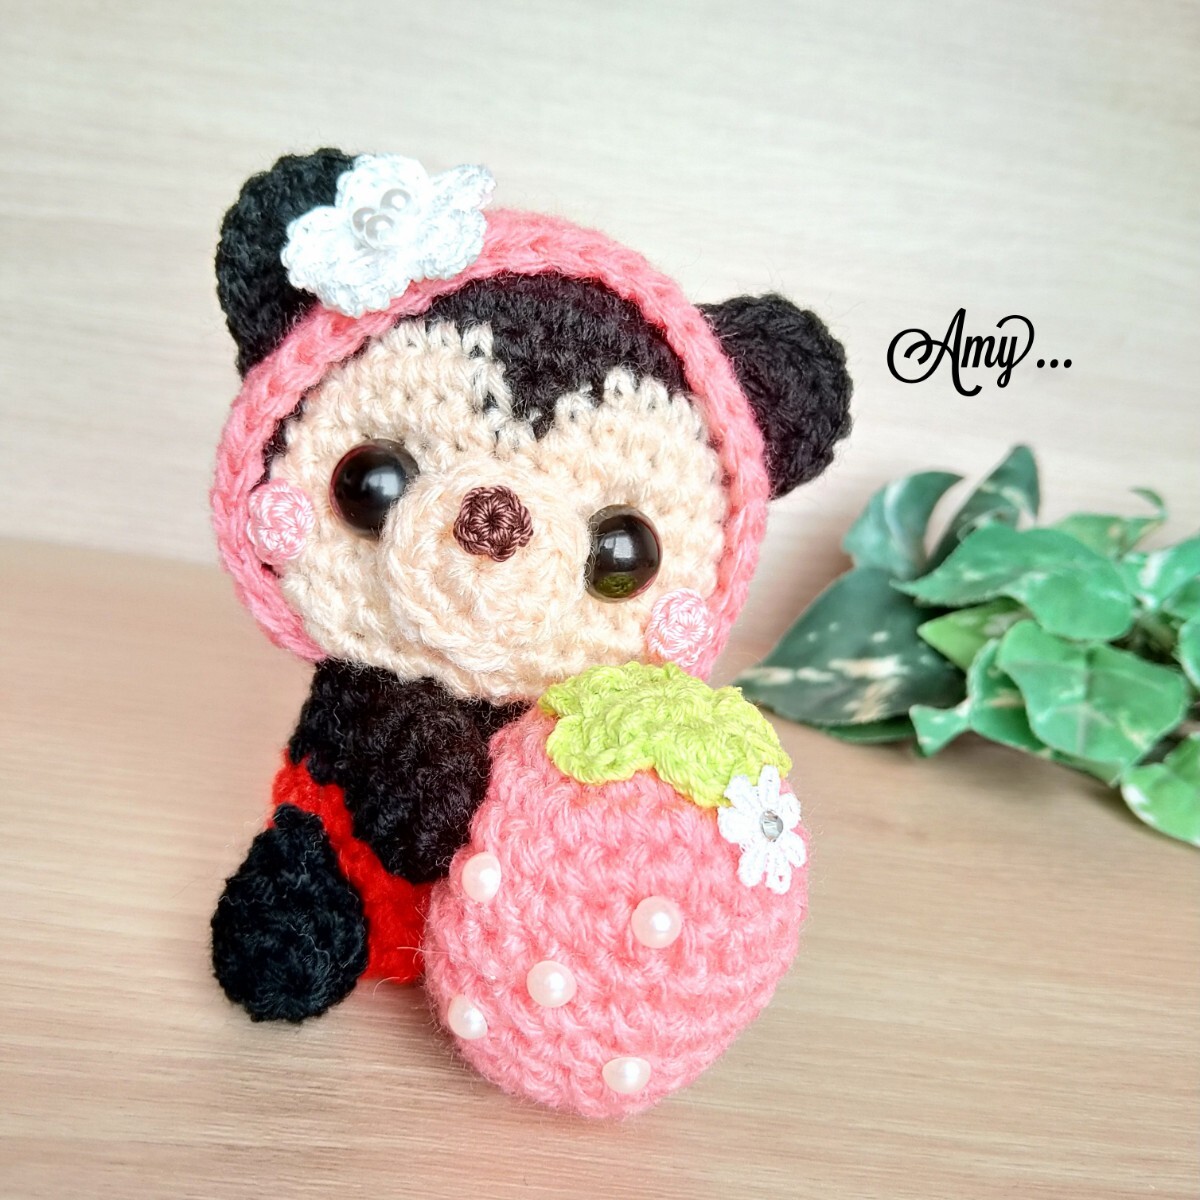 ■Amy... Amigurumi Plump Pearl Strawberry Hug★Garçon Livraison gratuite fait à la main♪, jouet, jeu, jouet en peluche, Amigurumi